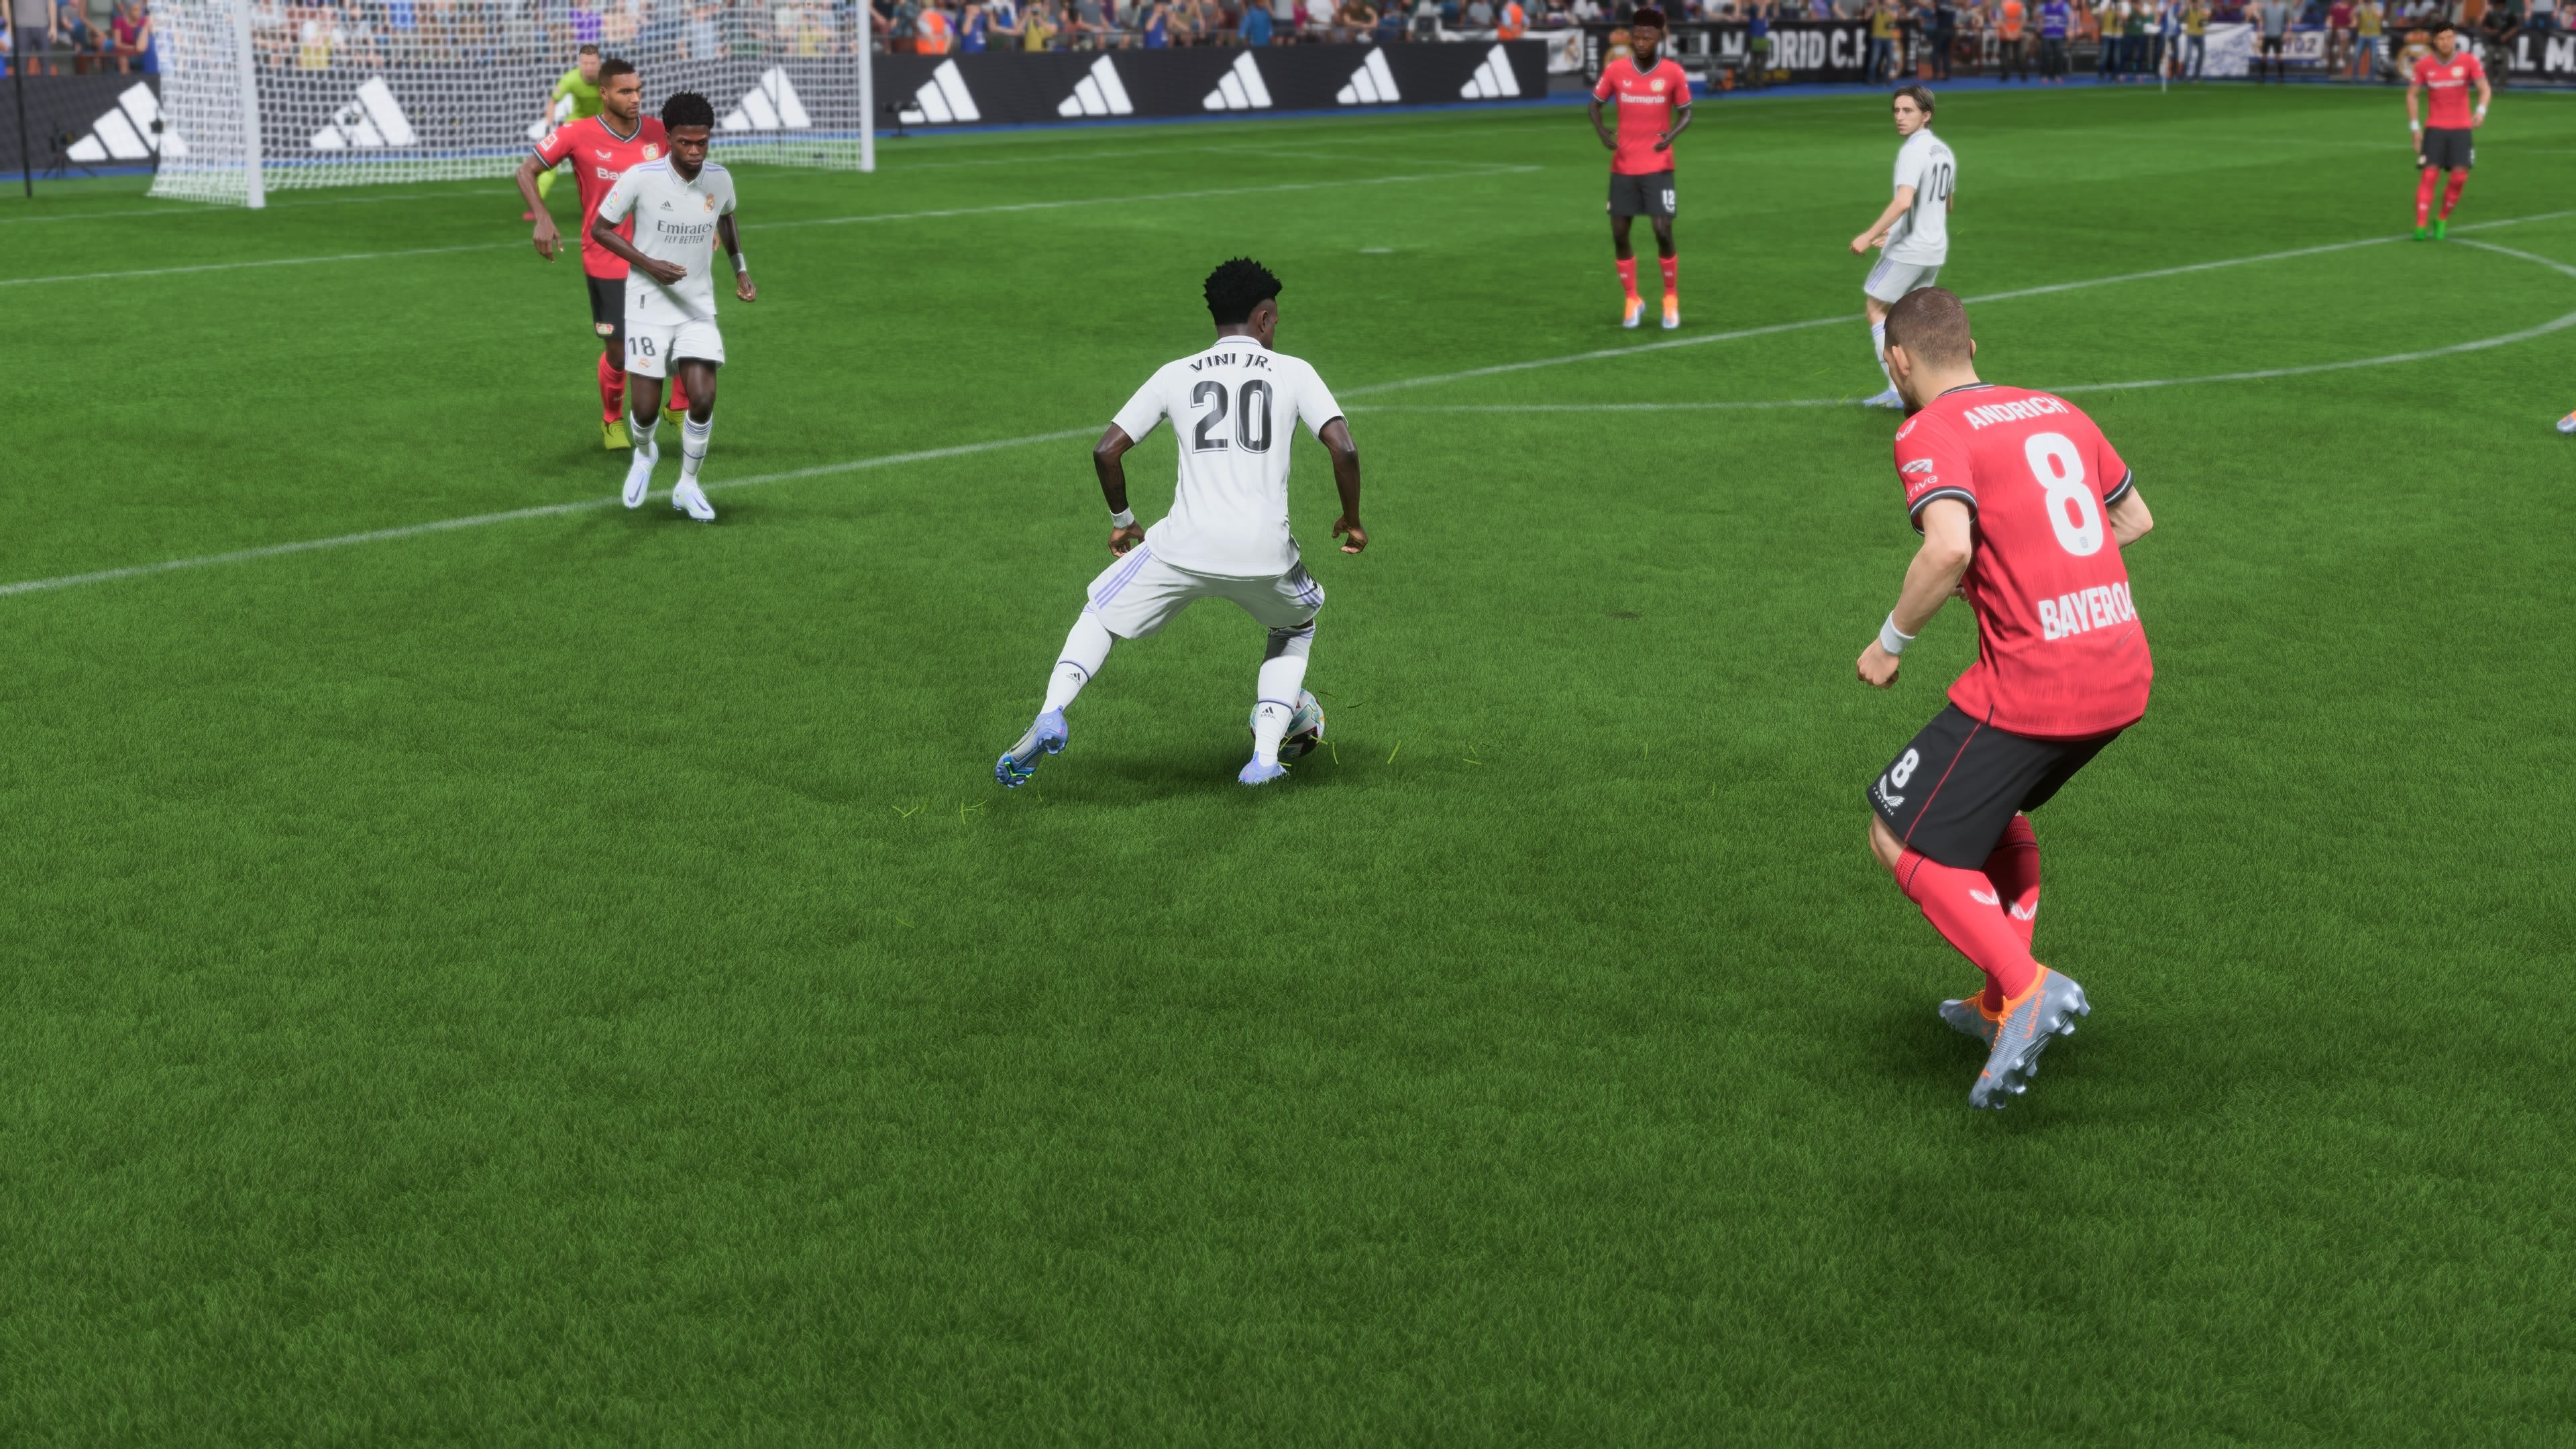 Real Madrid Wonderkid Vinicius Jr dribbles past defenders towards the goal in FIFA 23